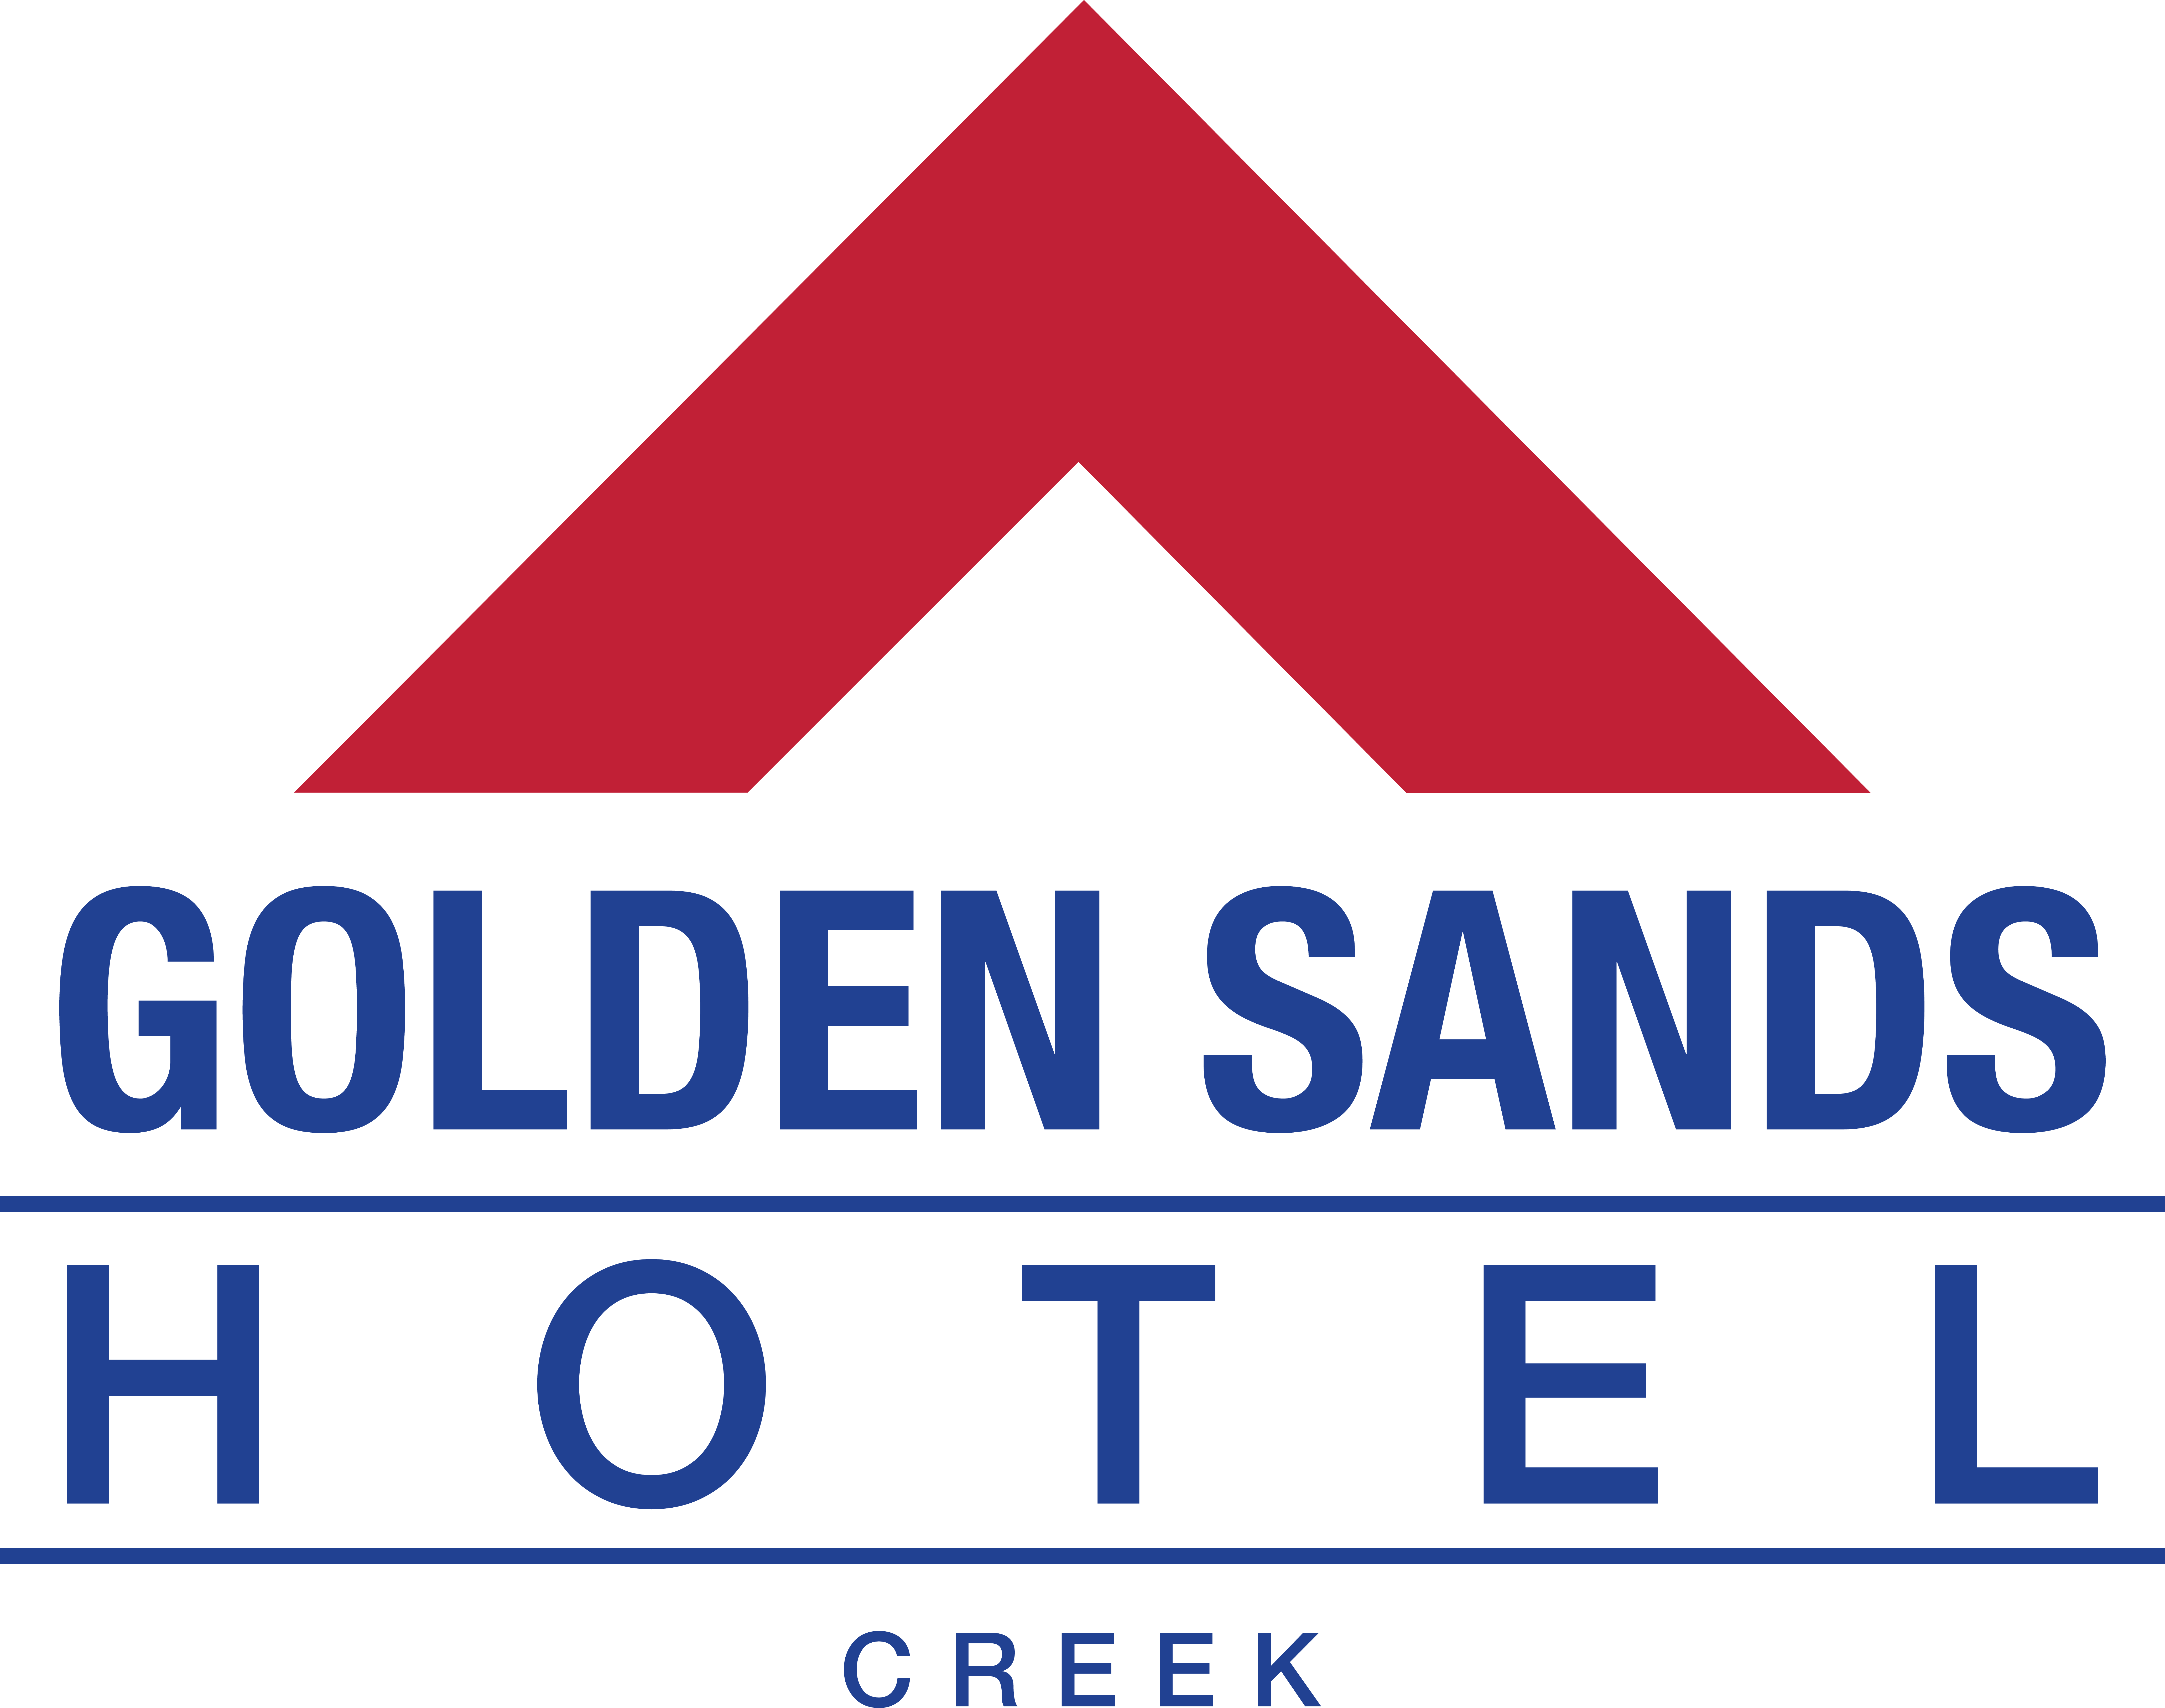 Golden Sands Hotel Creek Logo